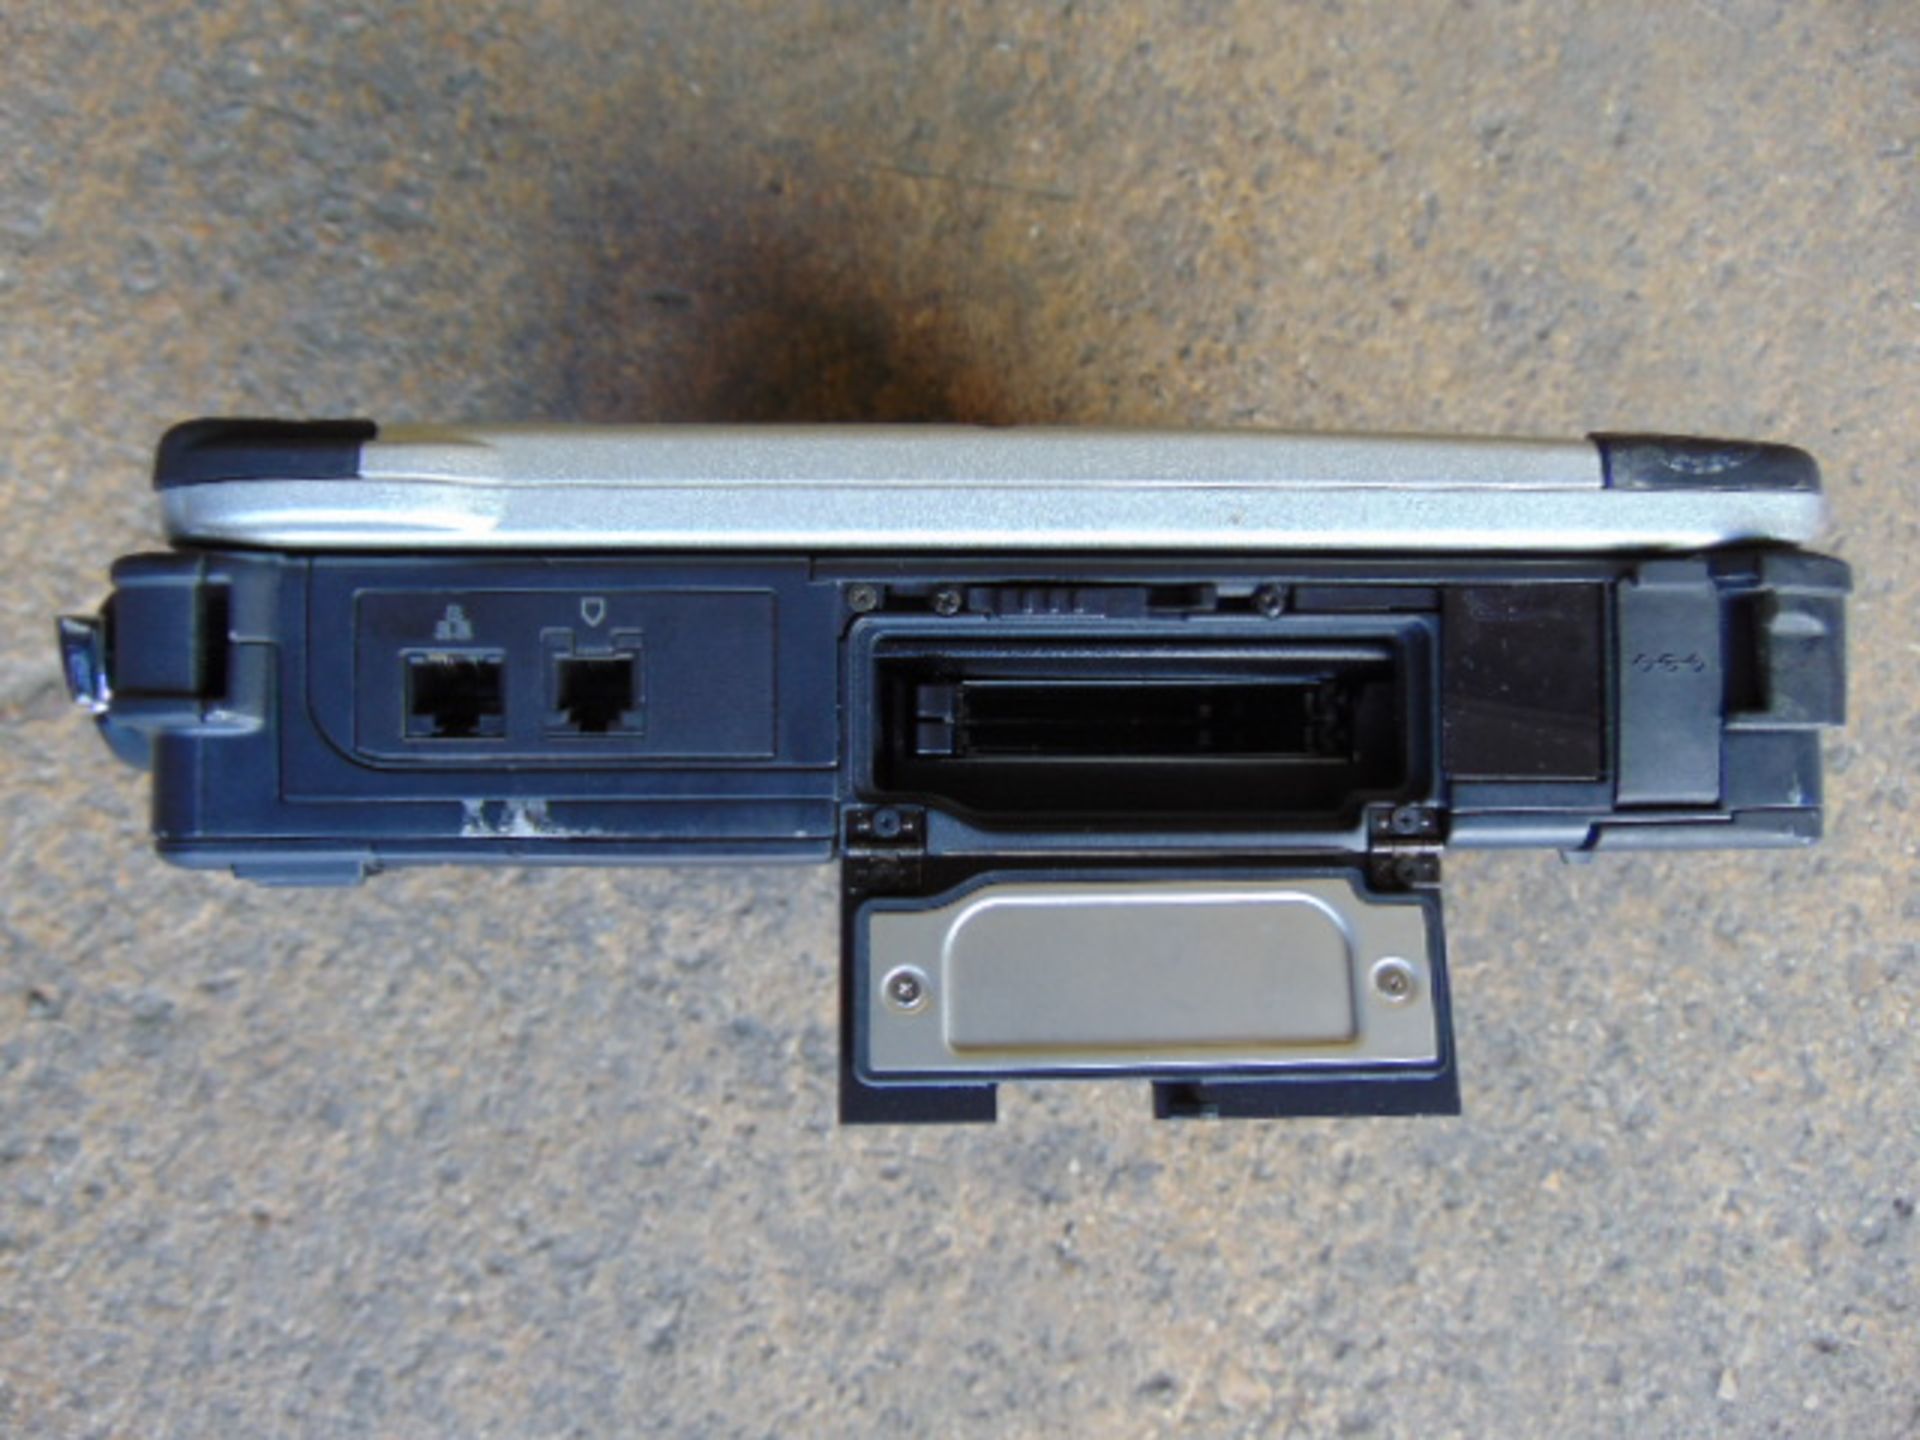 Panasonic CF-28 Toughbook Laptop - Image 11 of 12